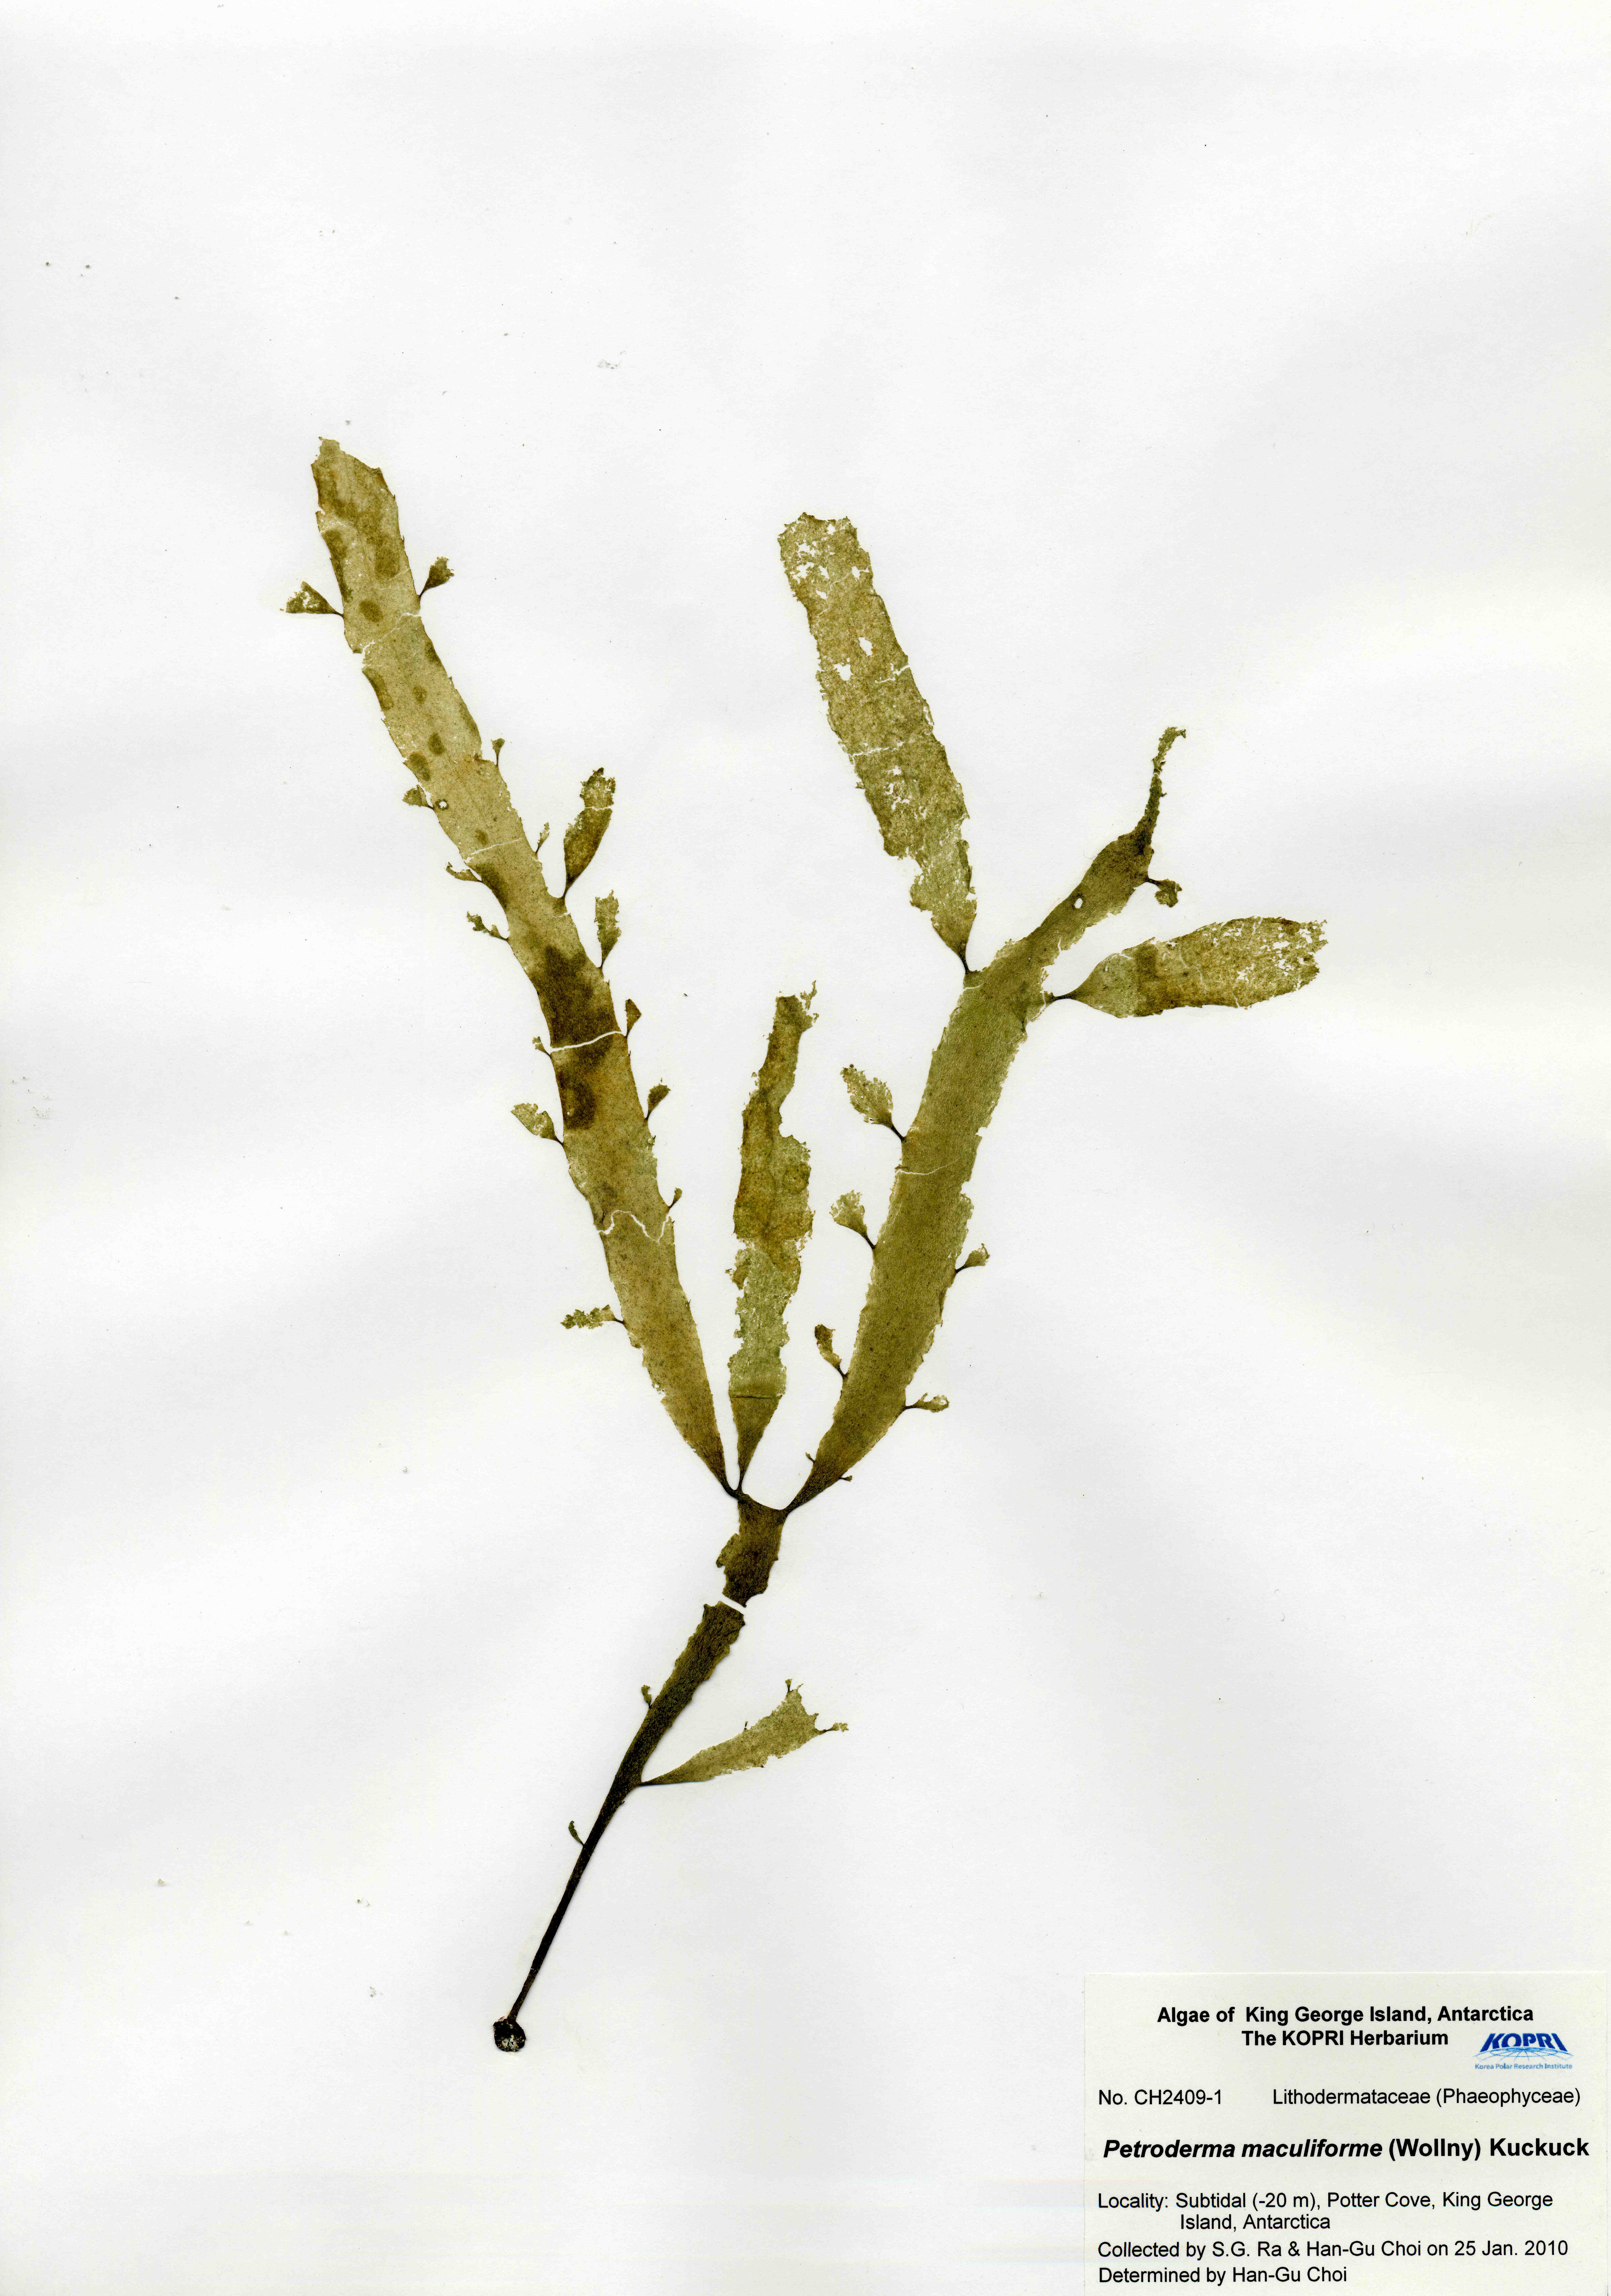 Petroderma maculiforme (Wollny) Kuckuck